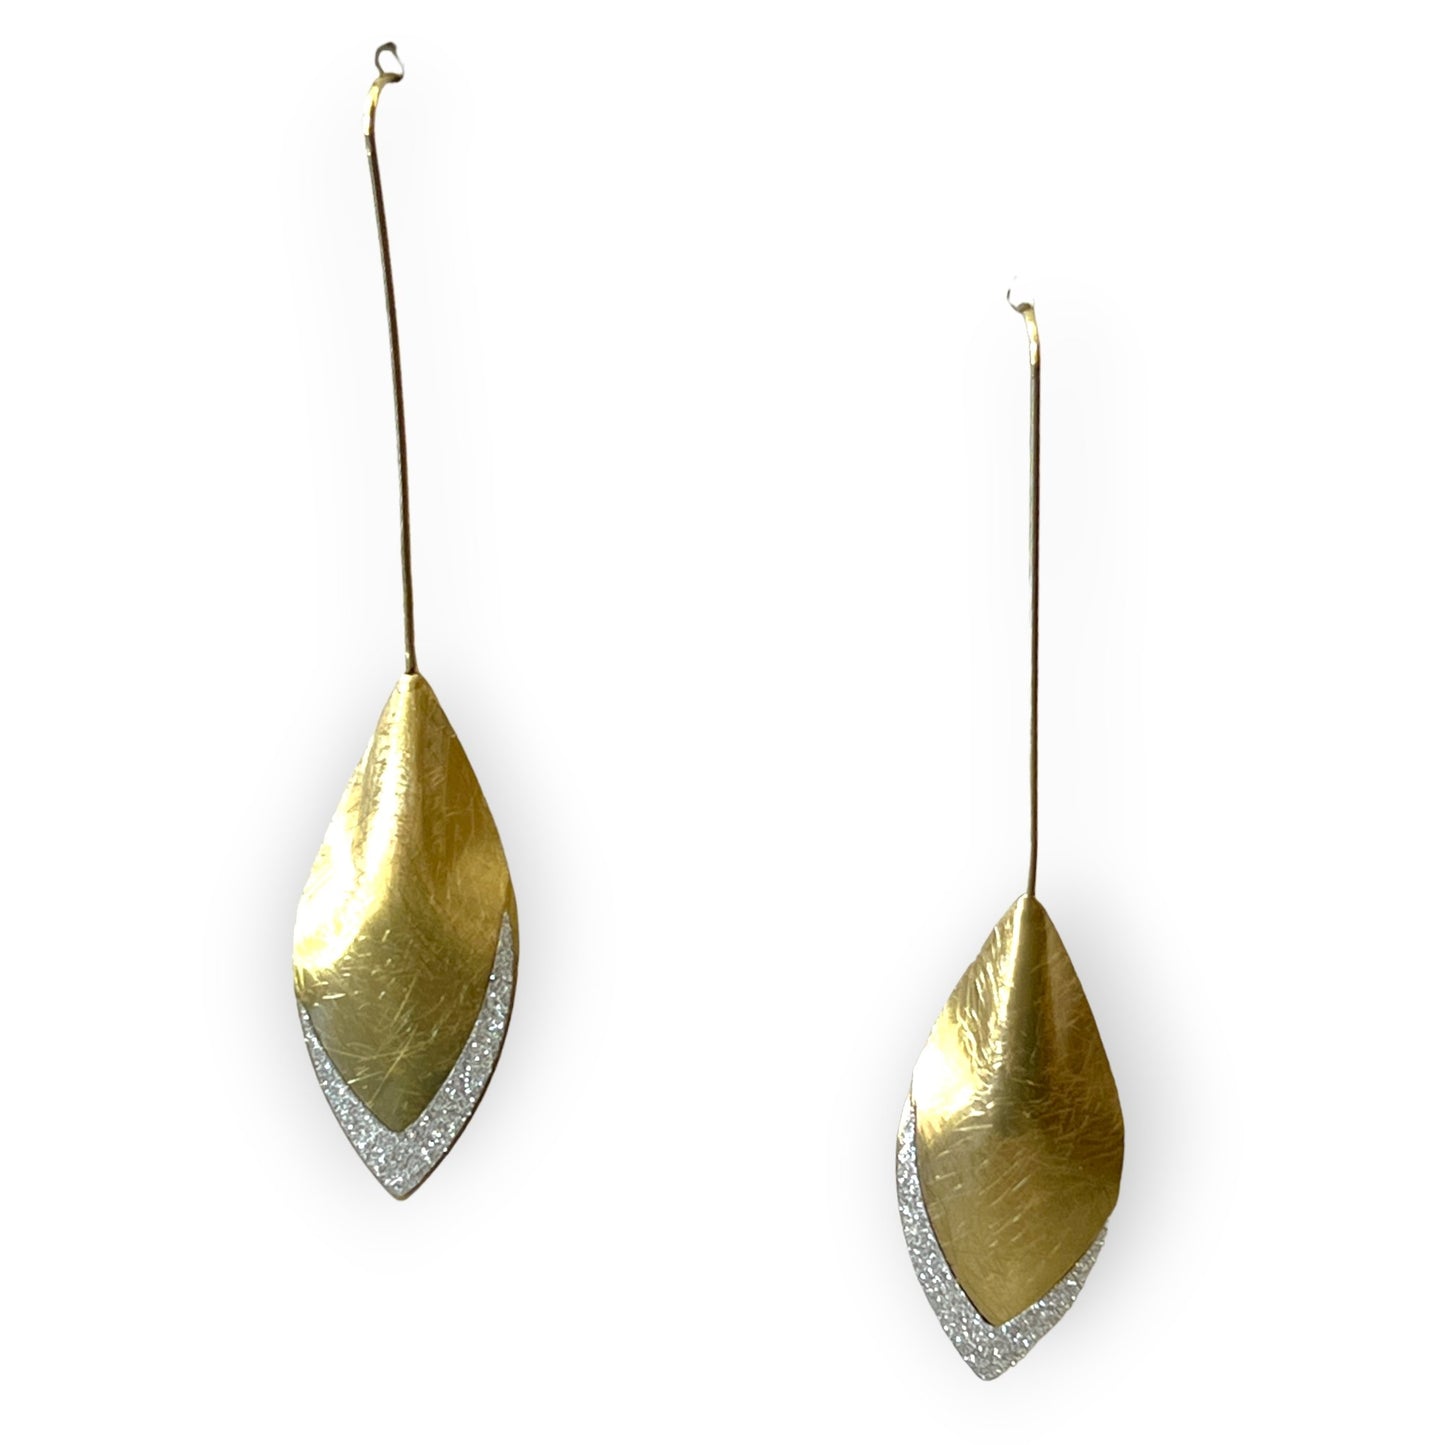 Matted drop metal statement earrings - Sundara Joon